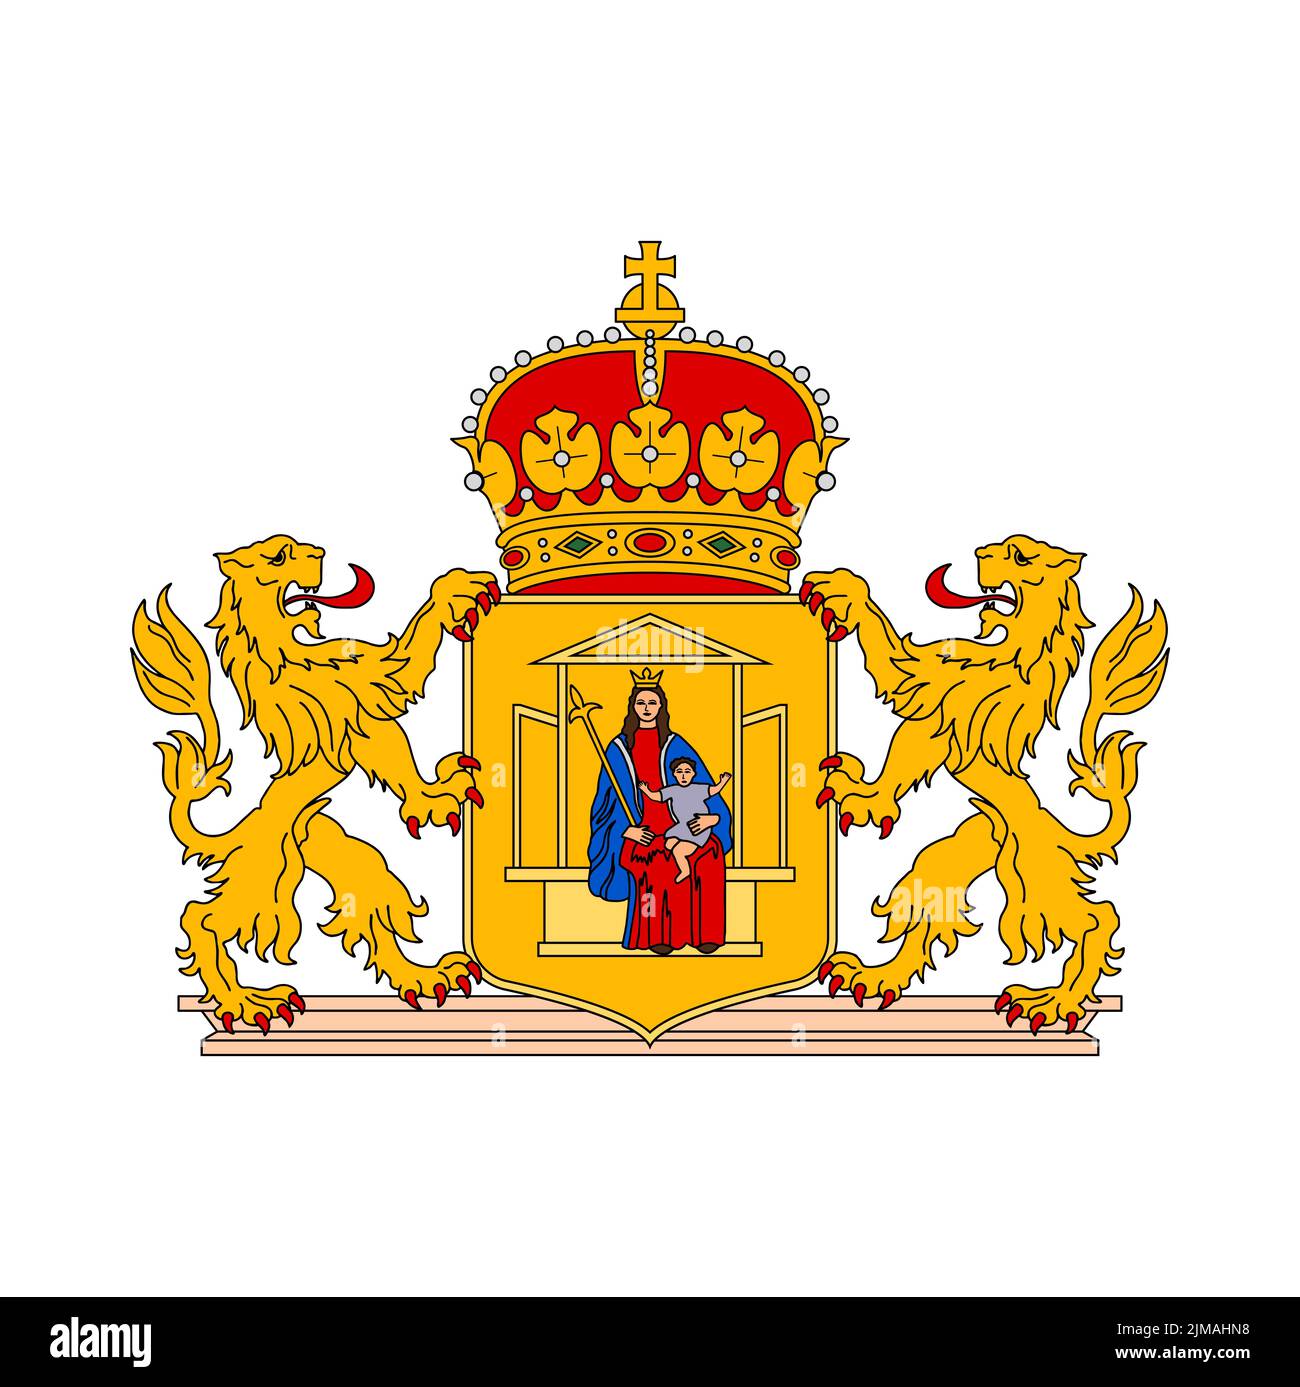 Niederlande Wappen, Provinz Drenthe Wappen, Vektor Heraldik. Niederländisches Wappen der niederländischen Provinz Drenthe mit Löwen, Monarch cr Stock Vektor